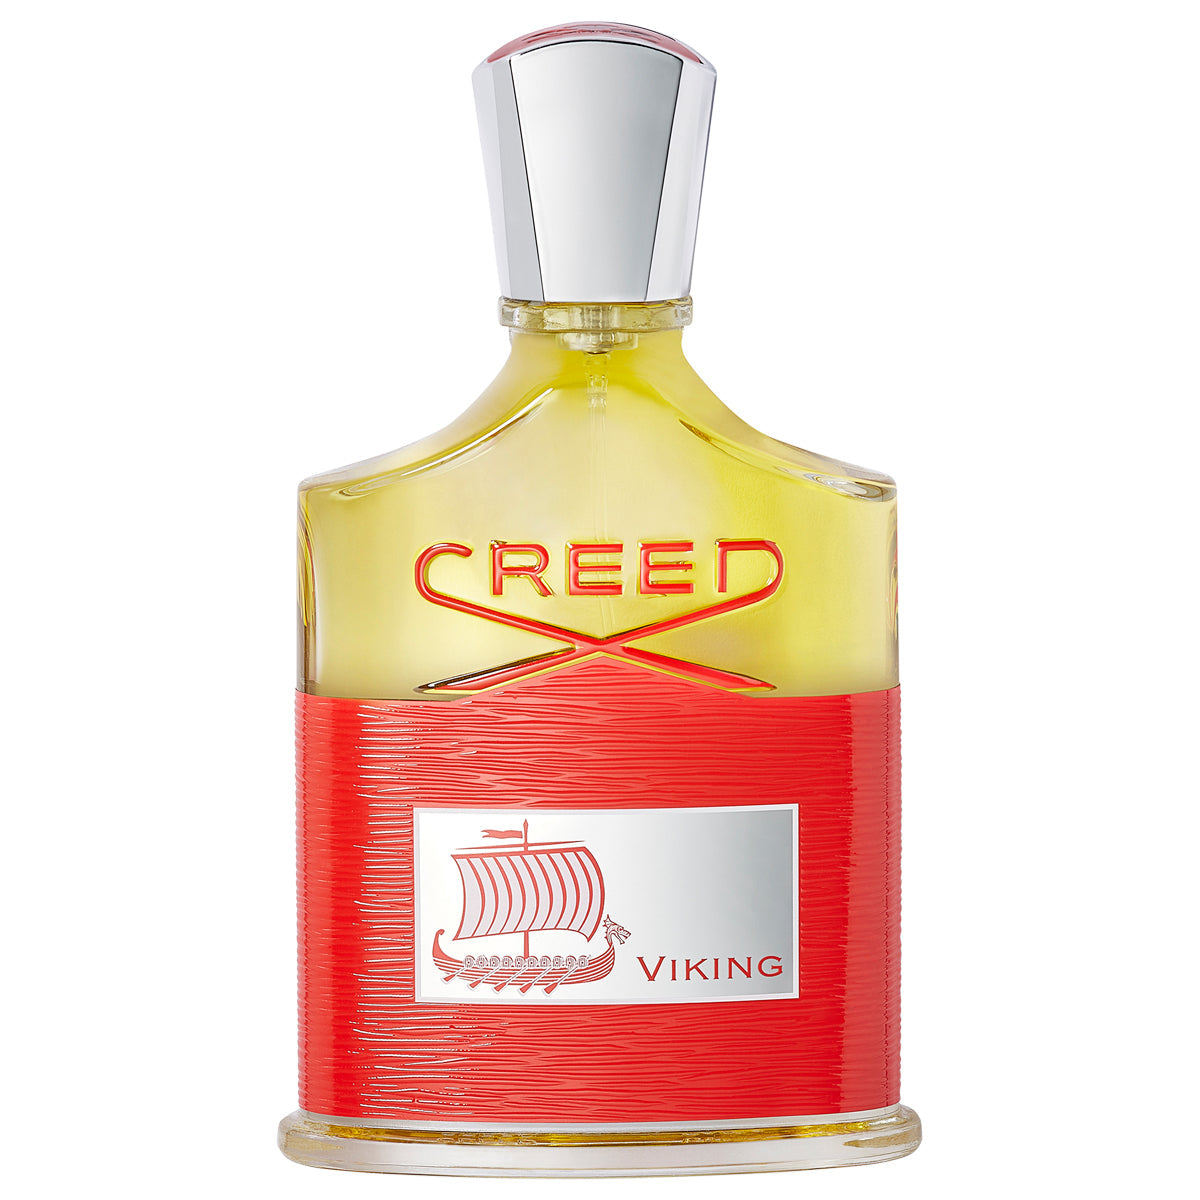 Creed Creed Viking - 100 ML